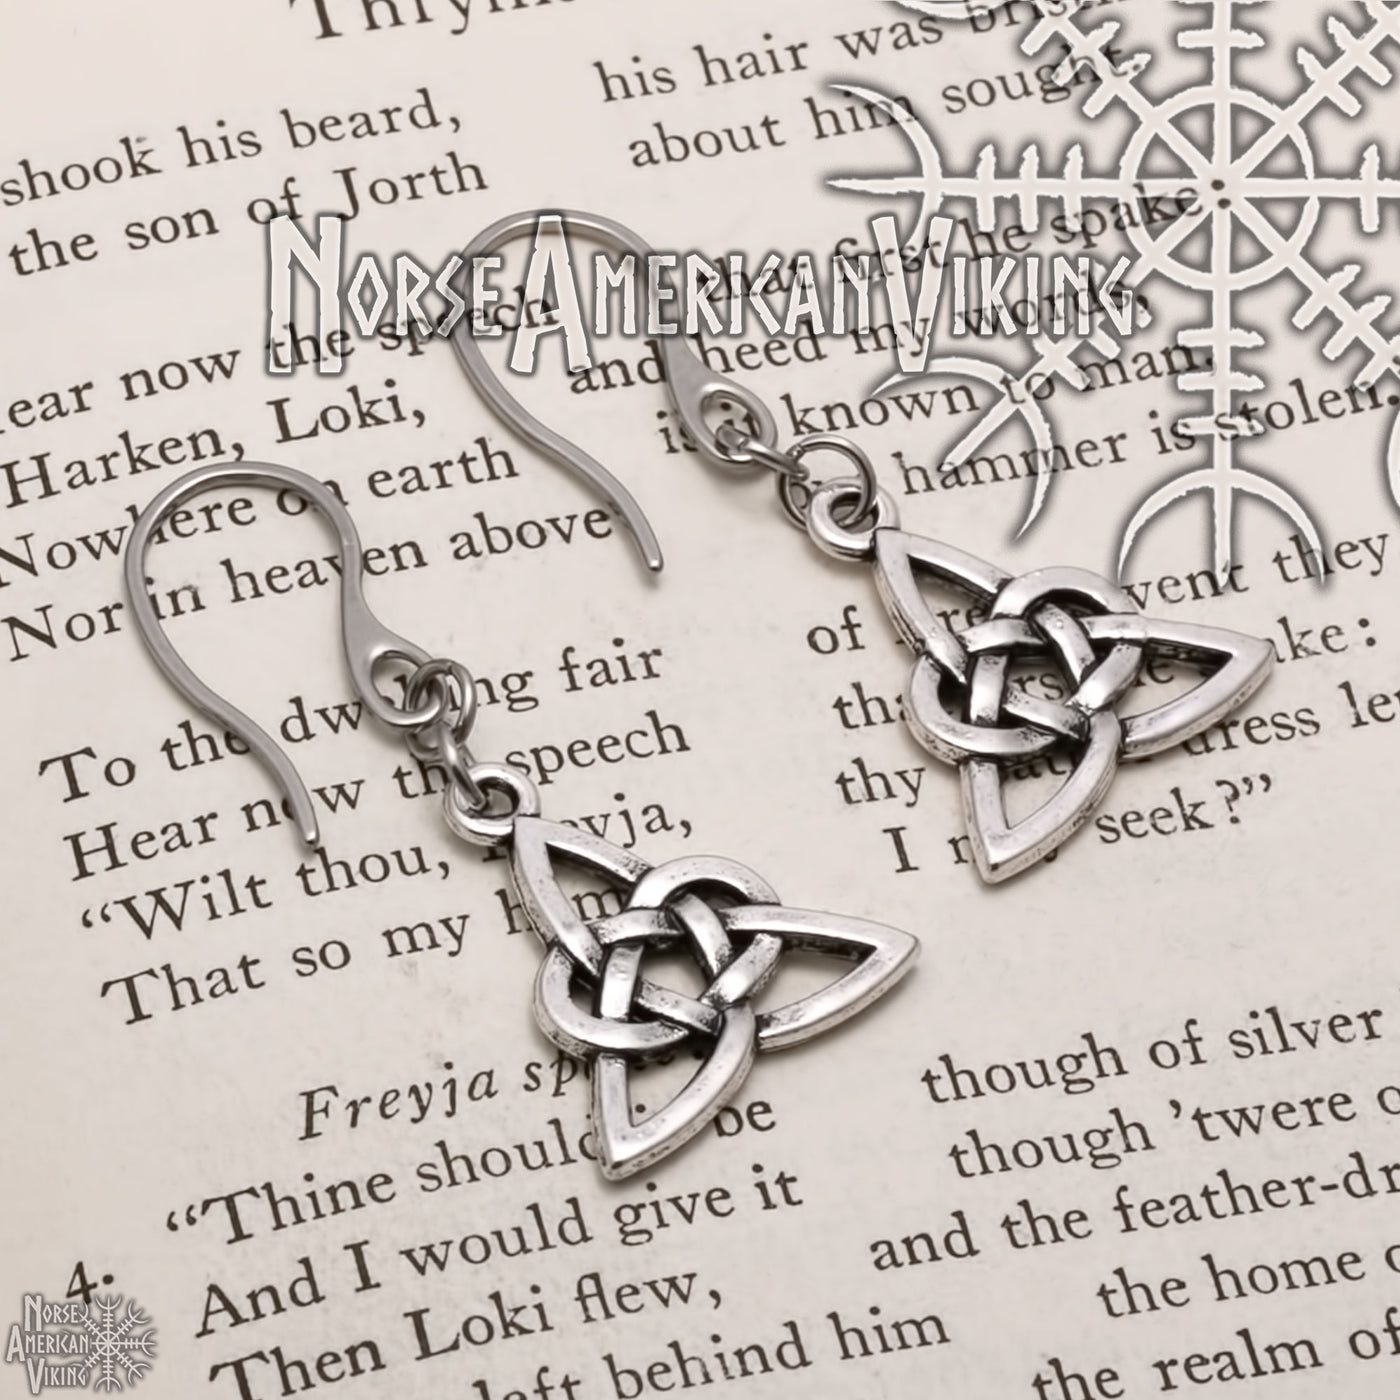 Viking Trinity Heart Knot Triquetra Knot Earrings